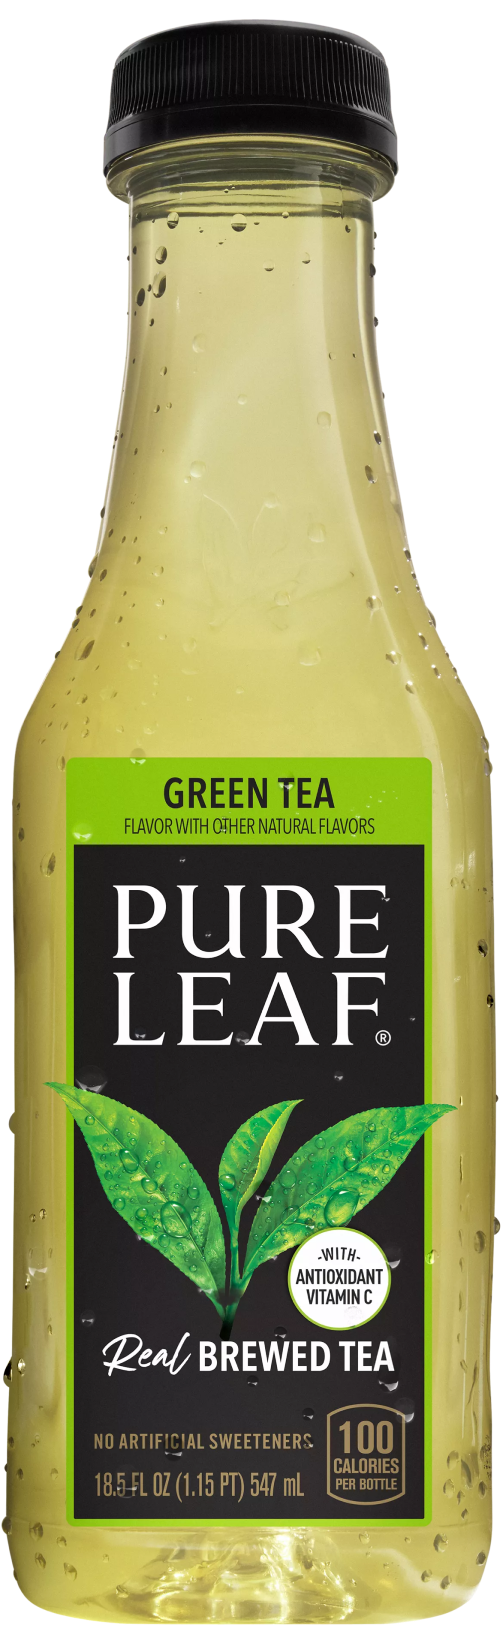 Pure Leaf Iced Tea, Sweetened Variety Pack, 18.5 fl oz. bottles (12 Pa –  Pete's Grocery & Gourmet